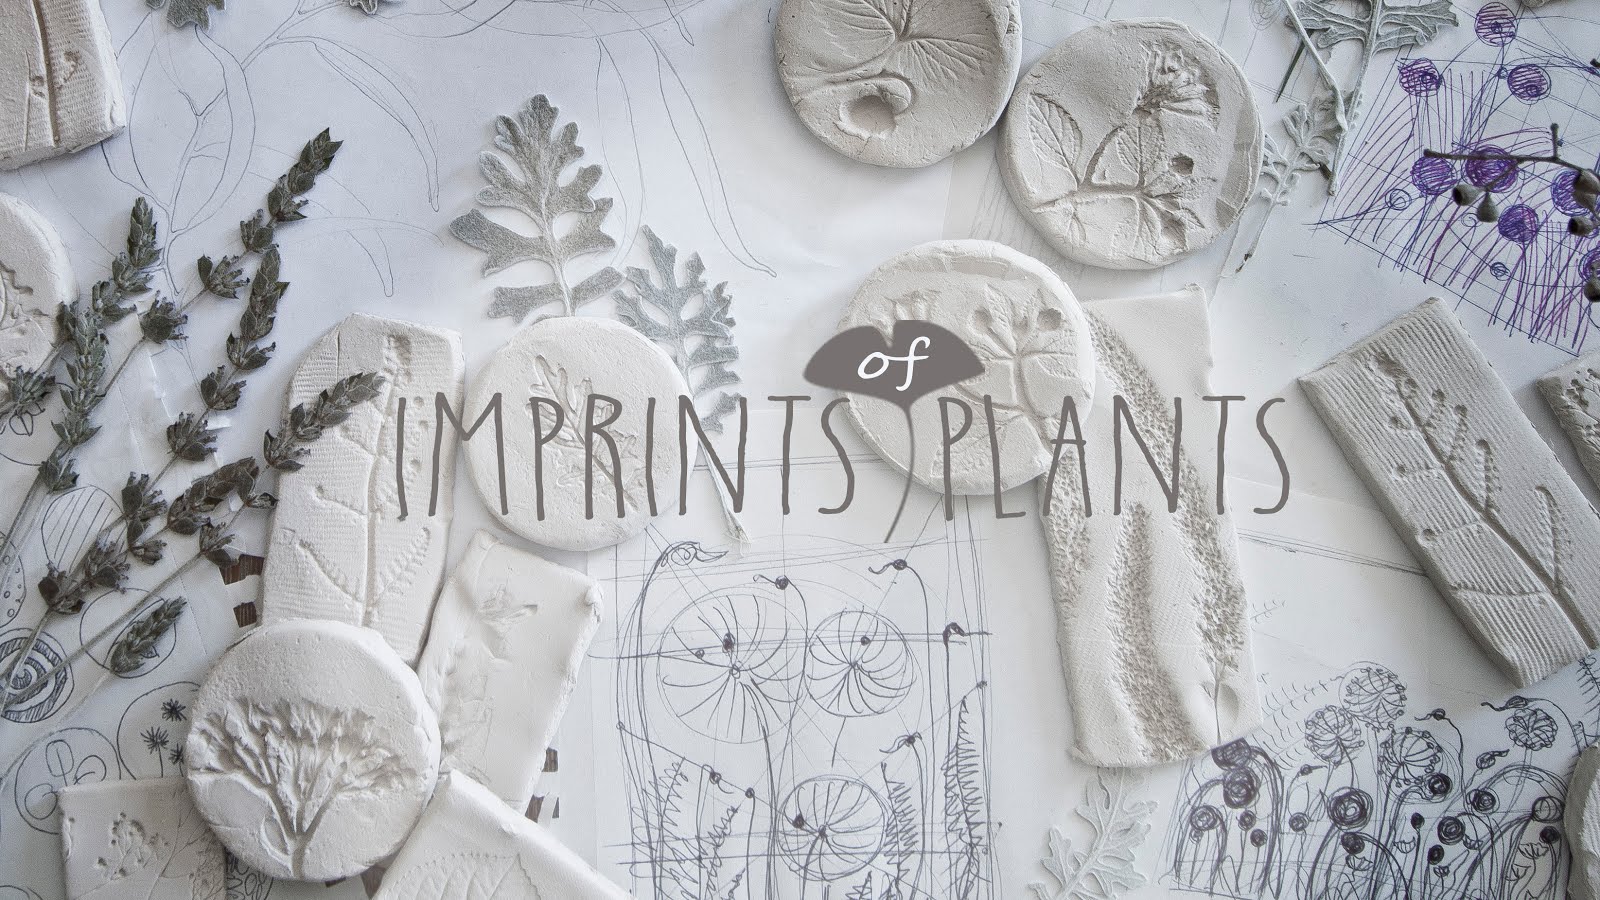 Imprints of Plants